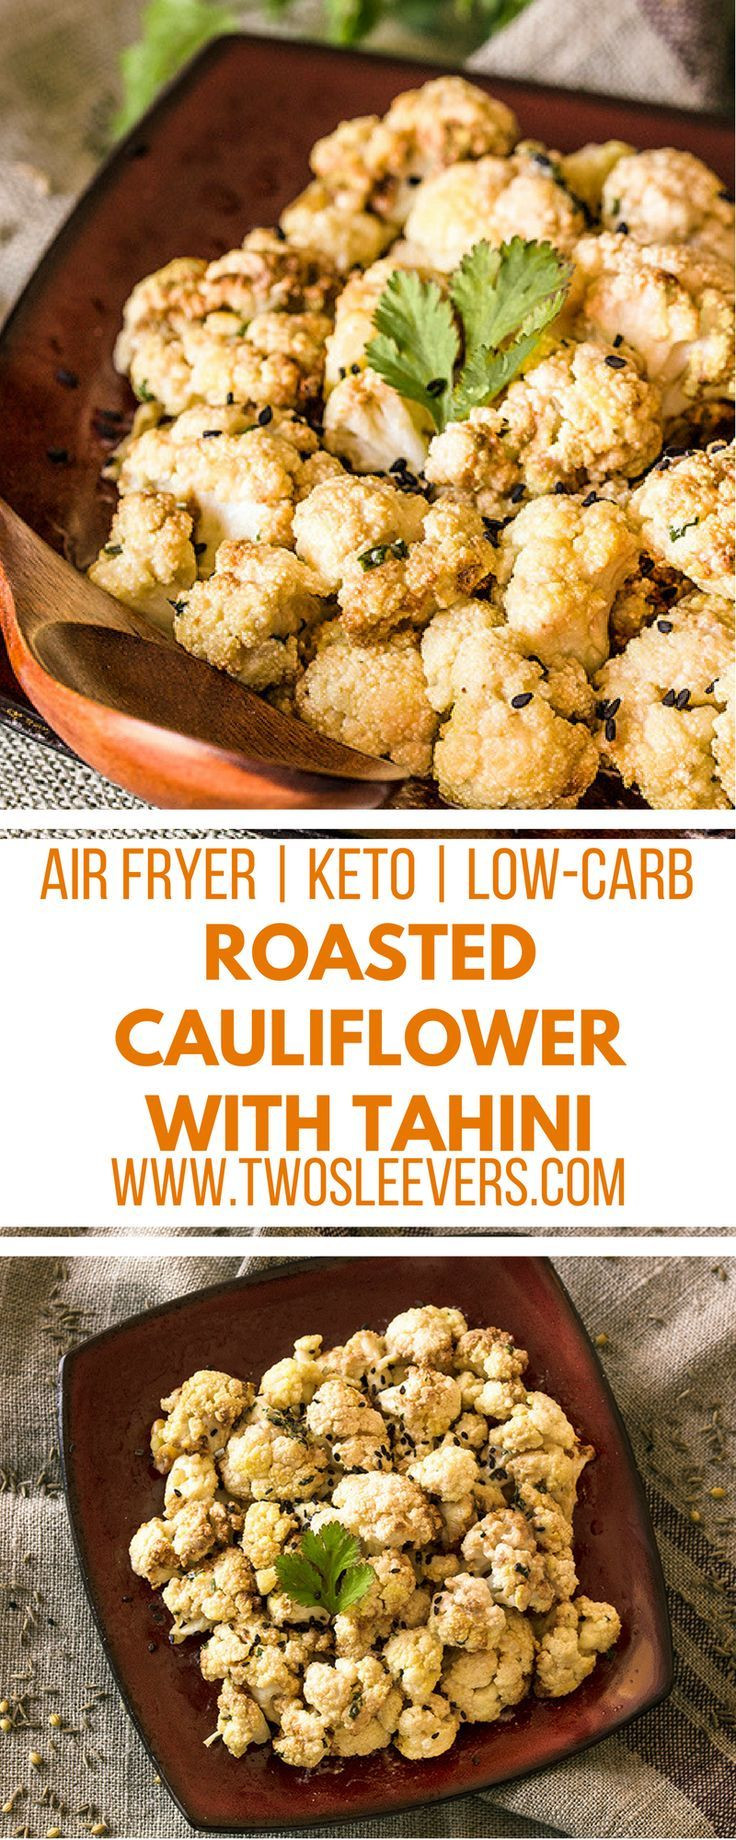 Vegetarian Keto Air Fryer Recipes
 Keto Air Fried Cauliflower with Tahini Recipe